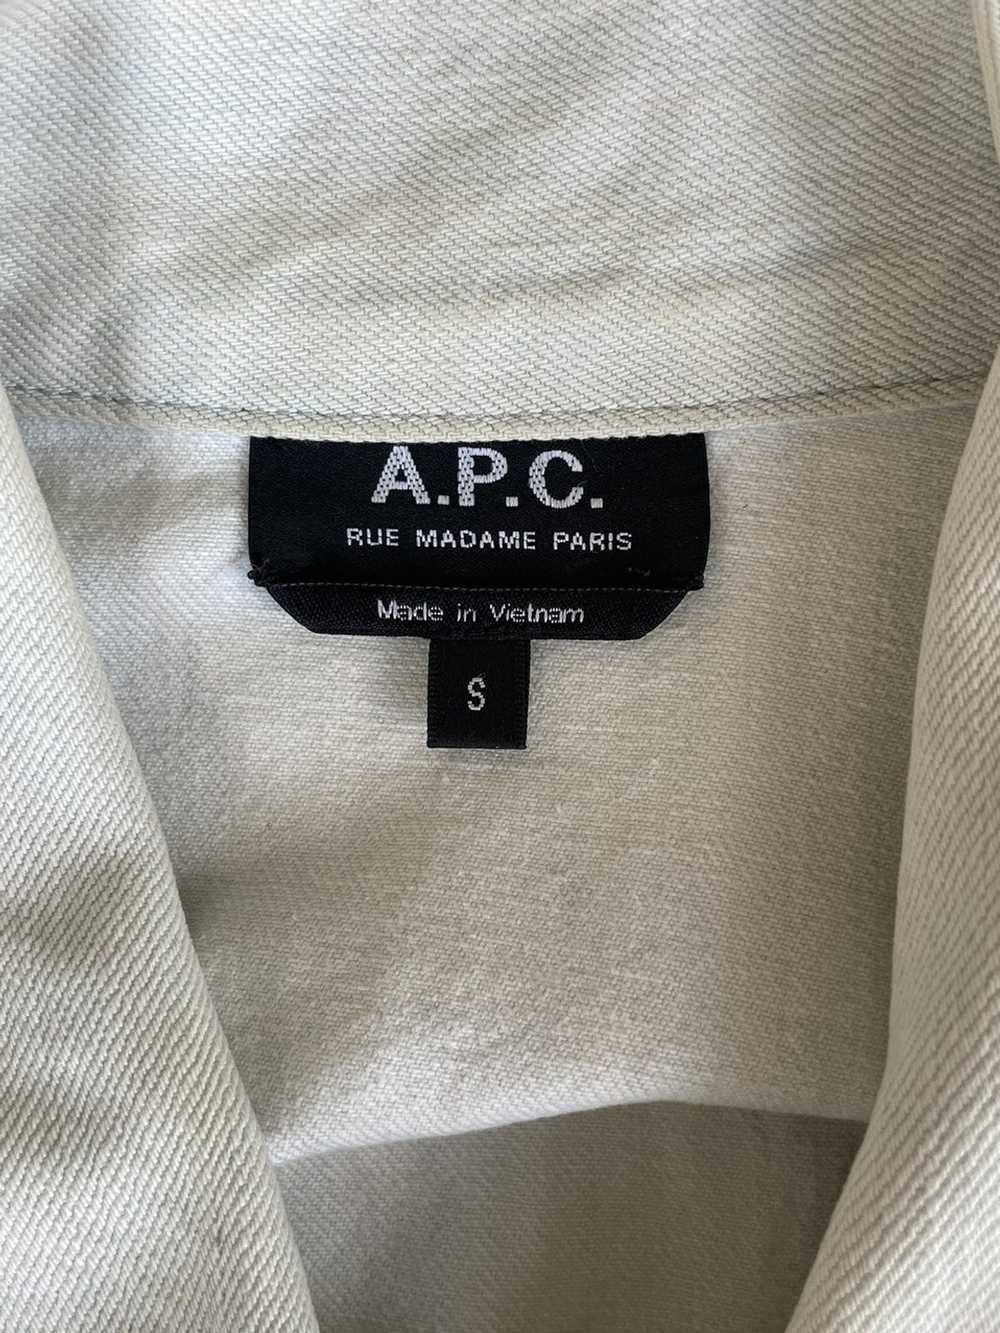 A.P.C. Light Wash Denim Jacket, Small - image 9